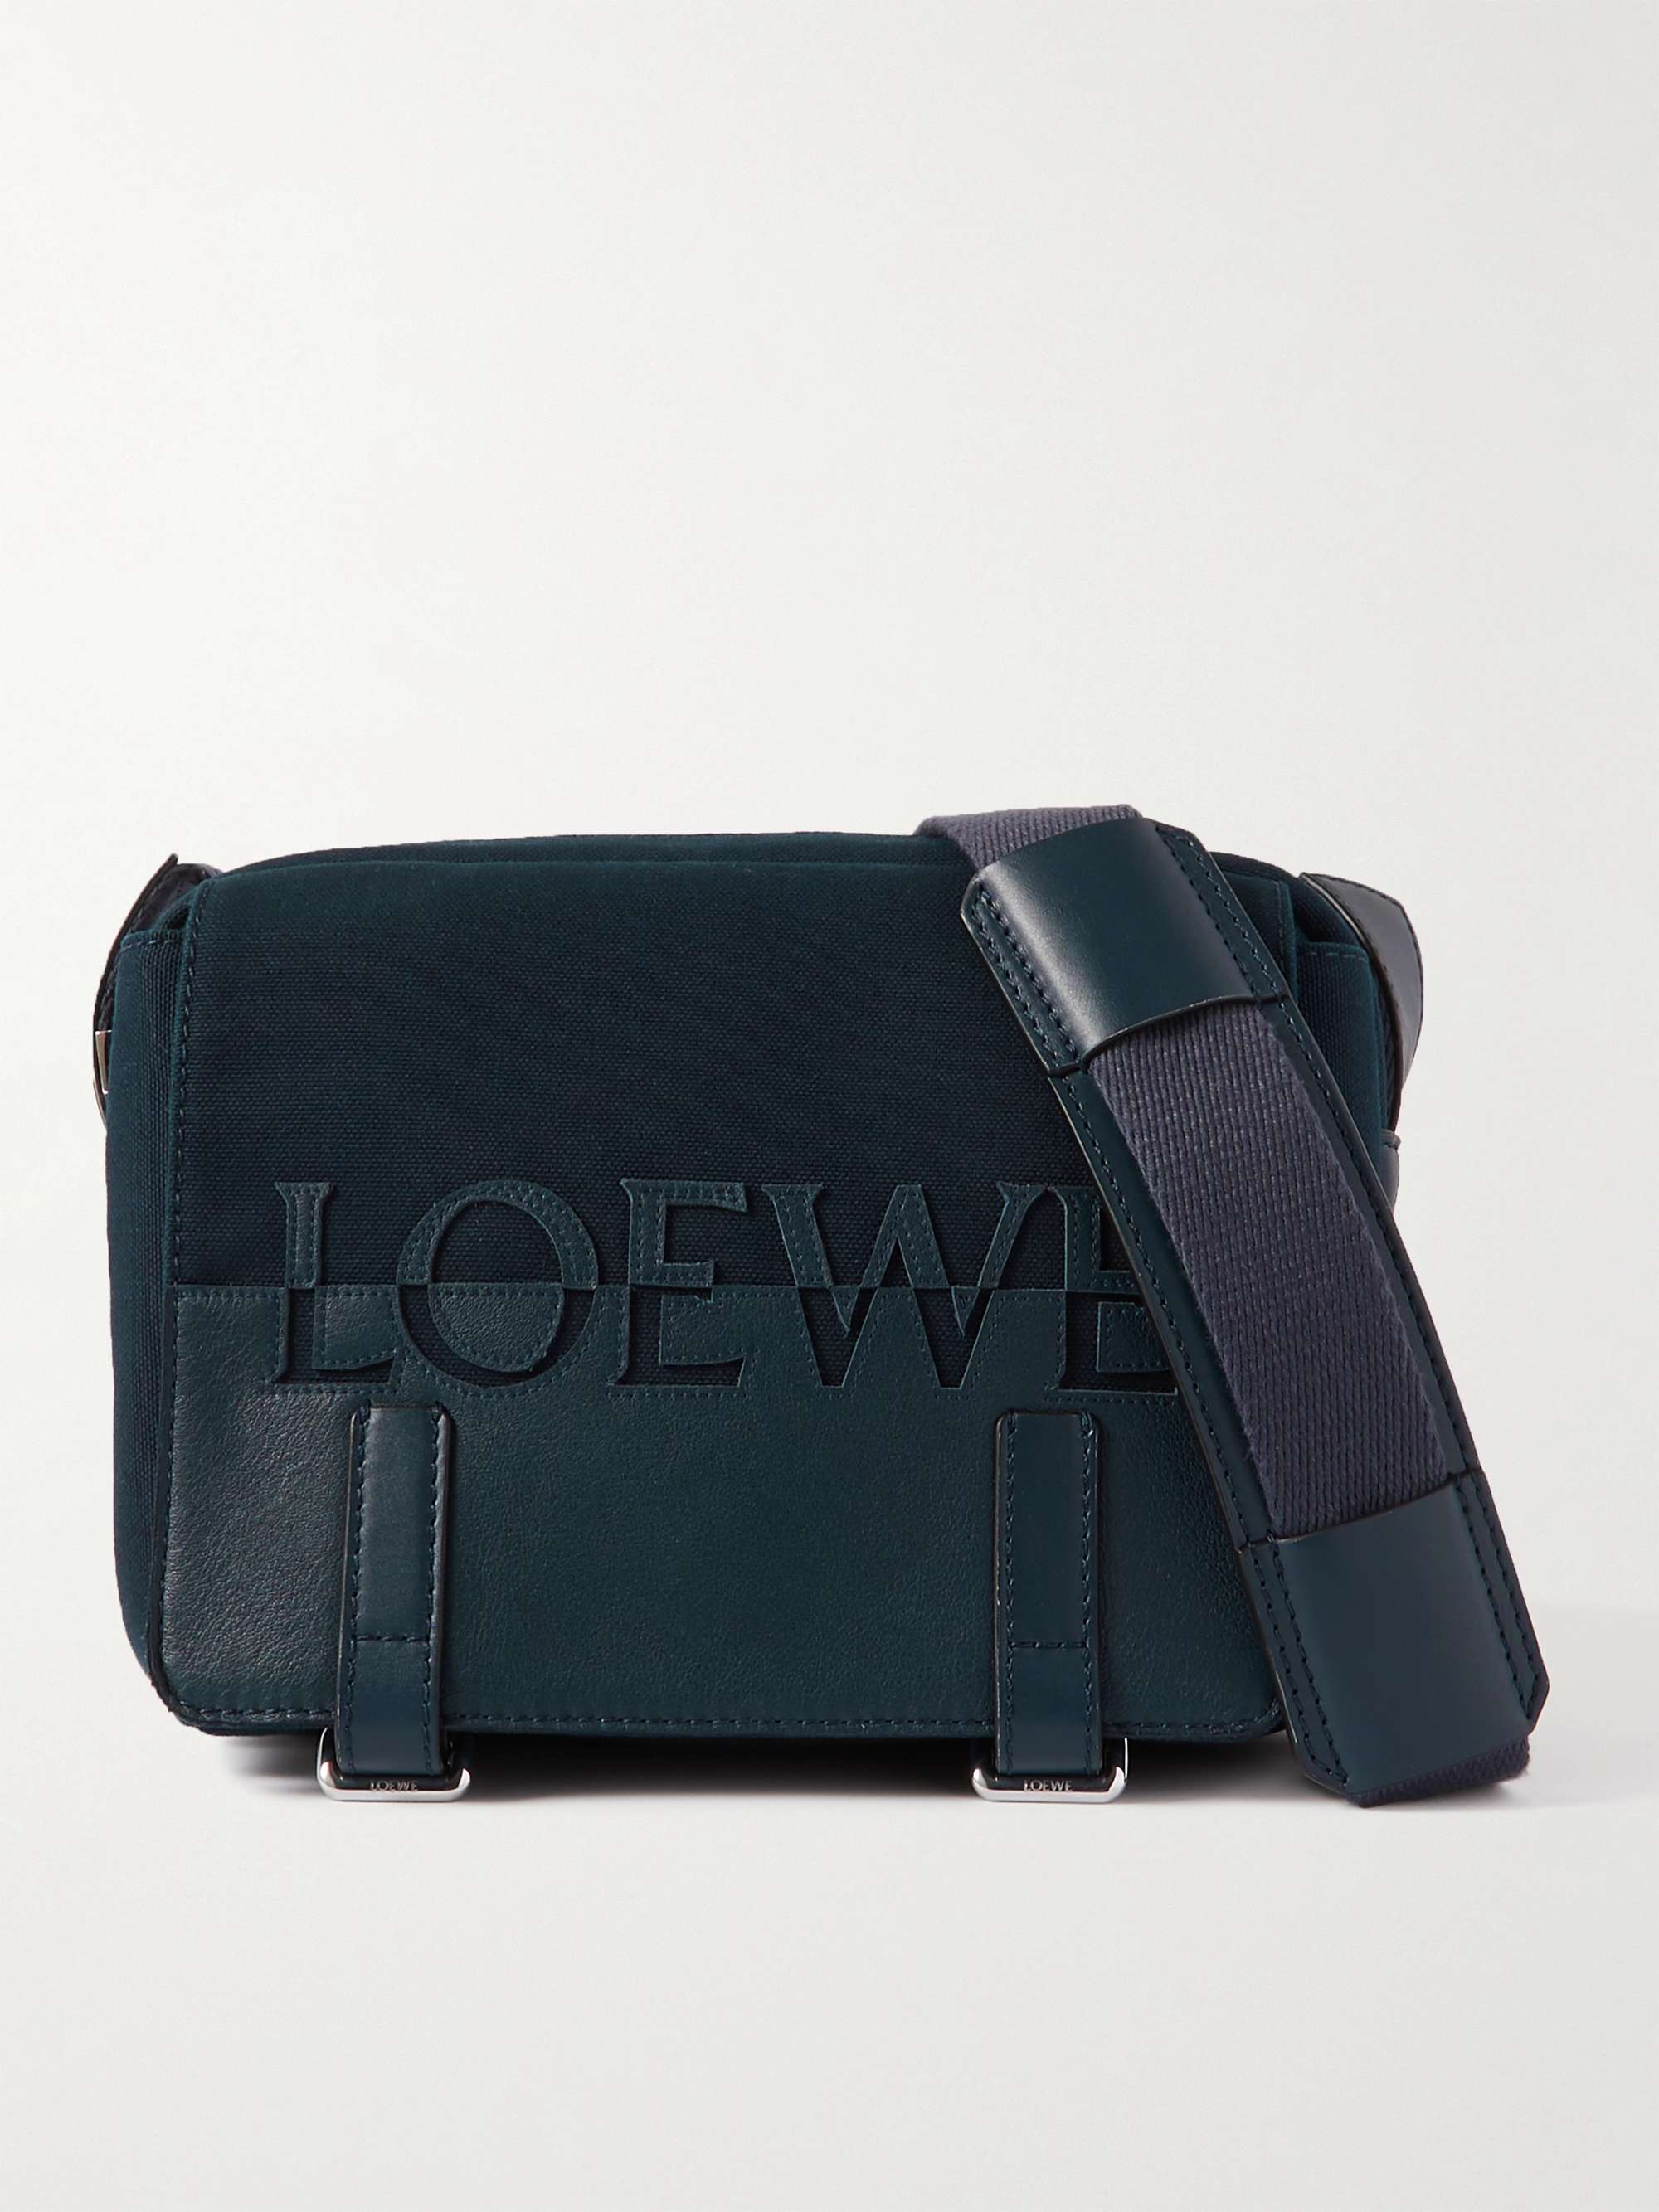 LOEWE Military XS Leather-Trimmed Canvas Messenger Bag for Men | MR PORTER